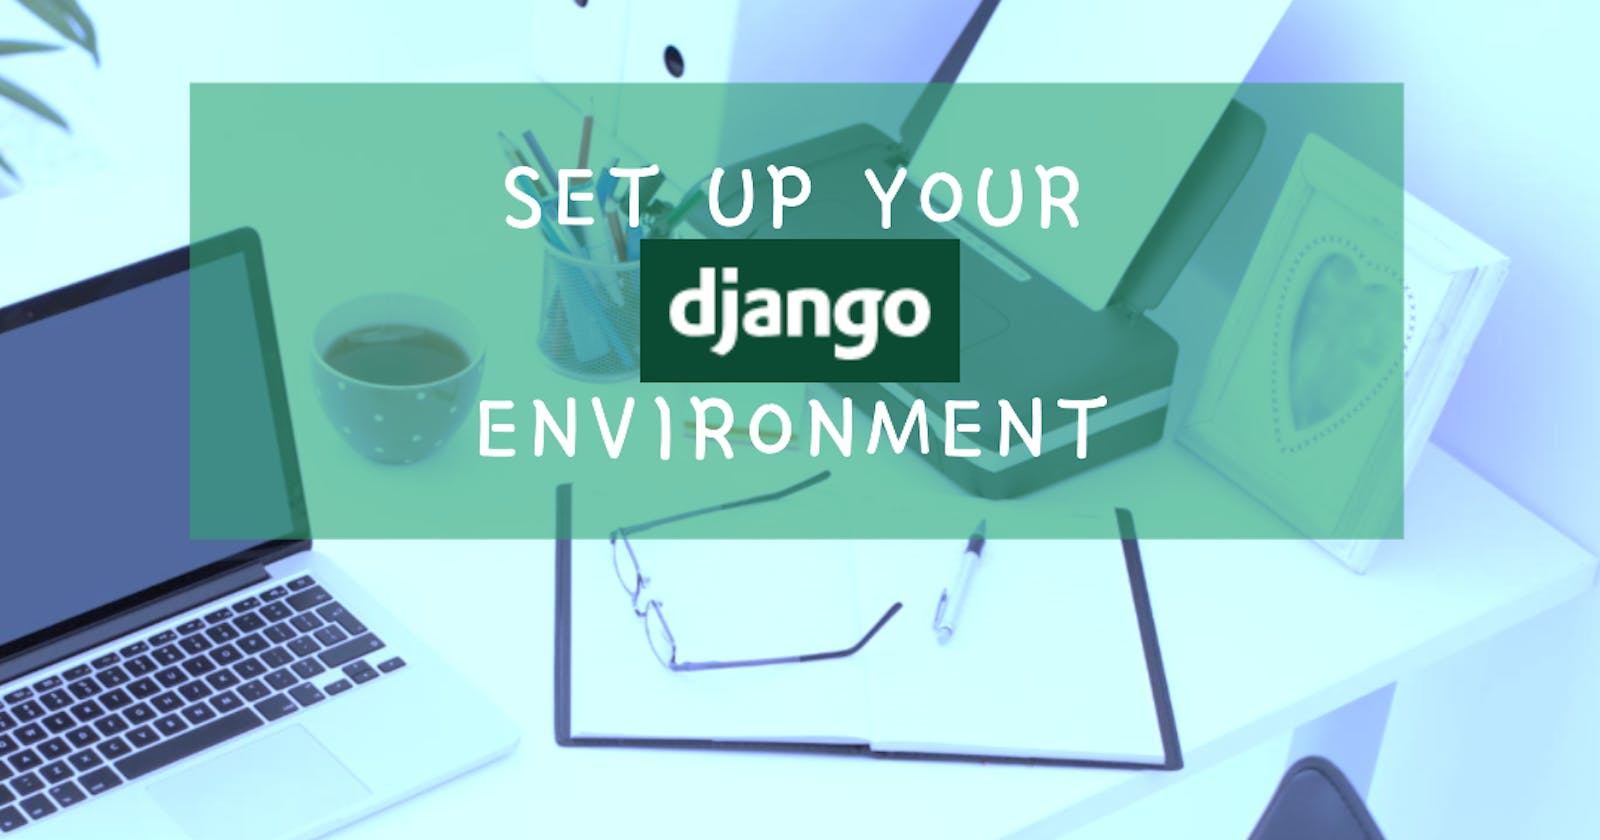 How to Set Up a Django Development Environment